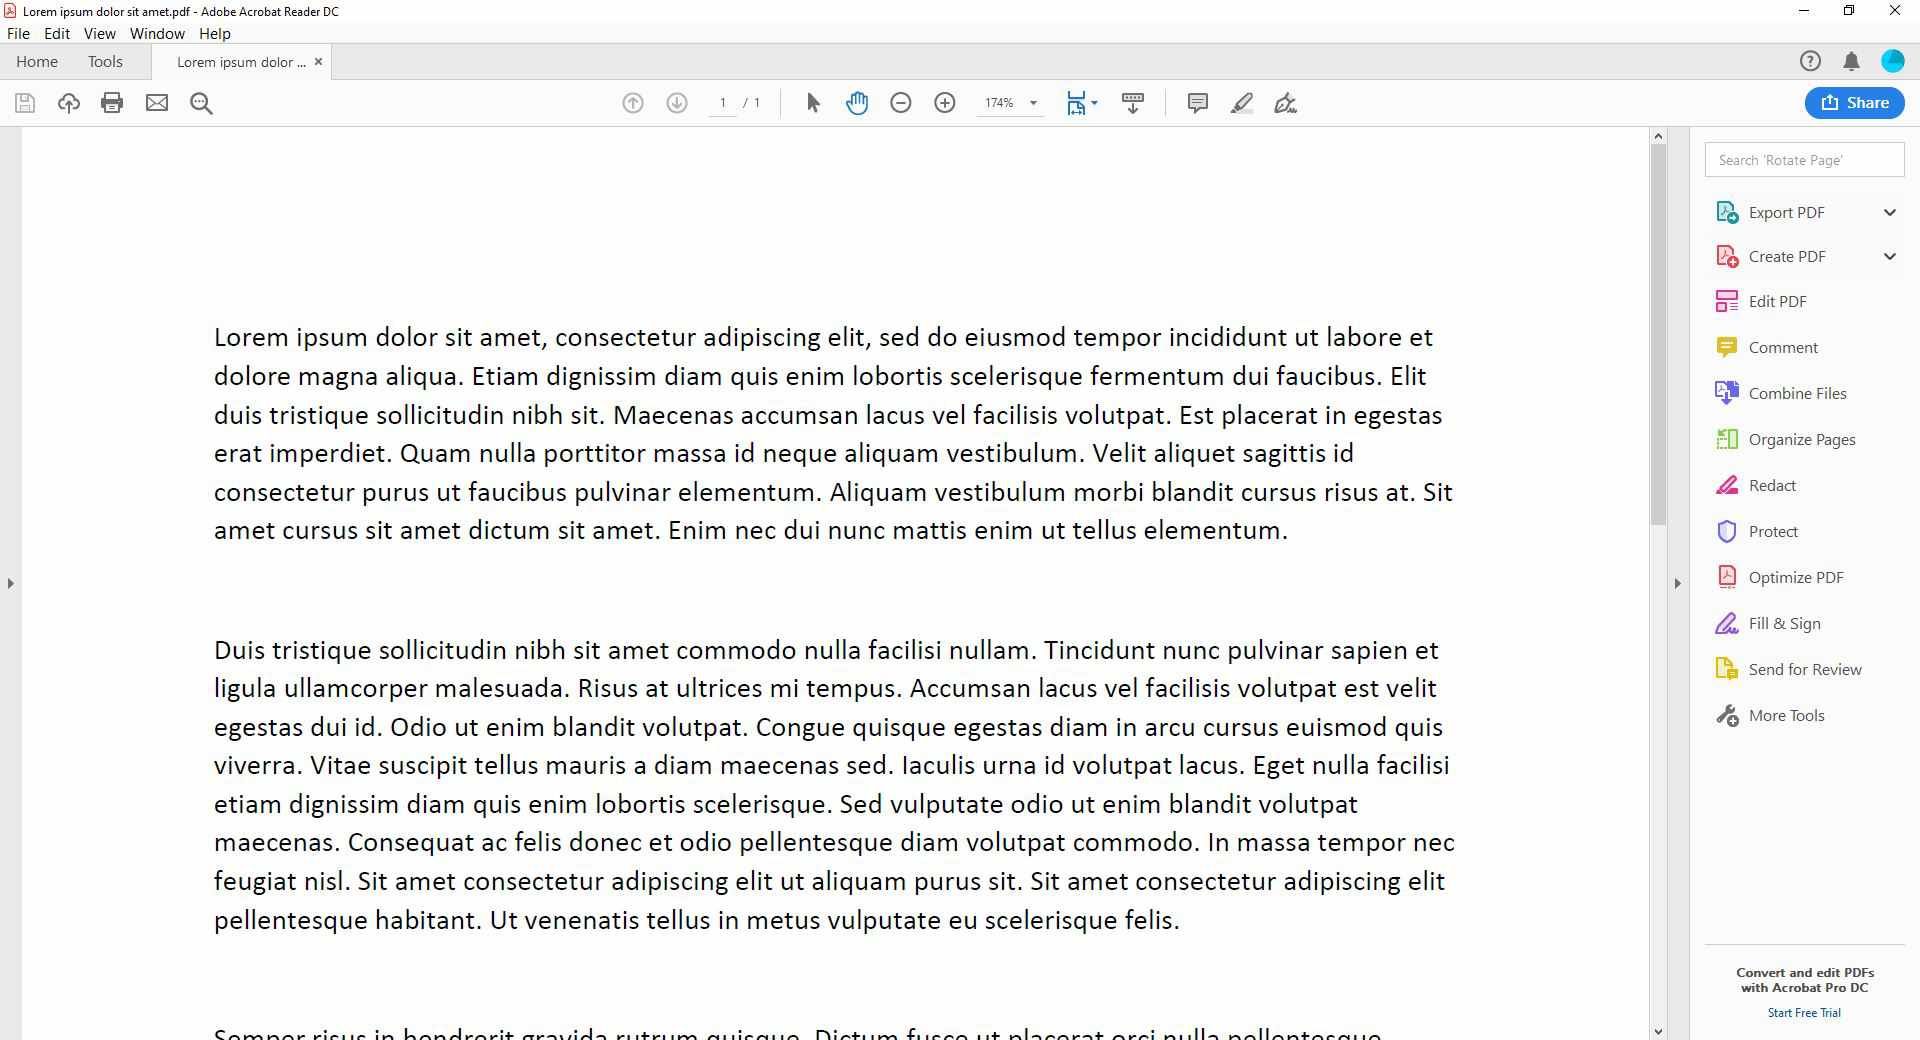 Снимок экрана экспорта PDF в левой панели окна Adobe Acrobat